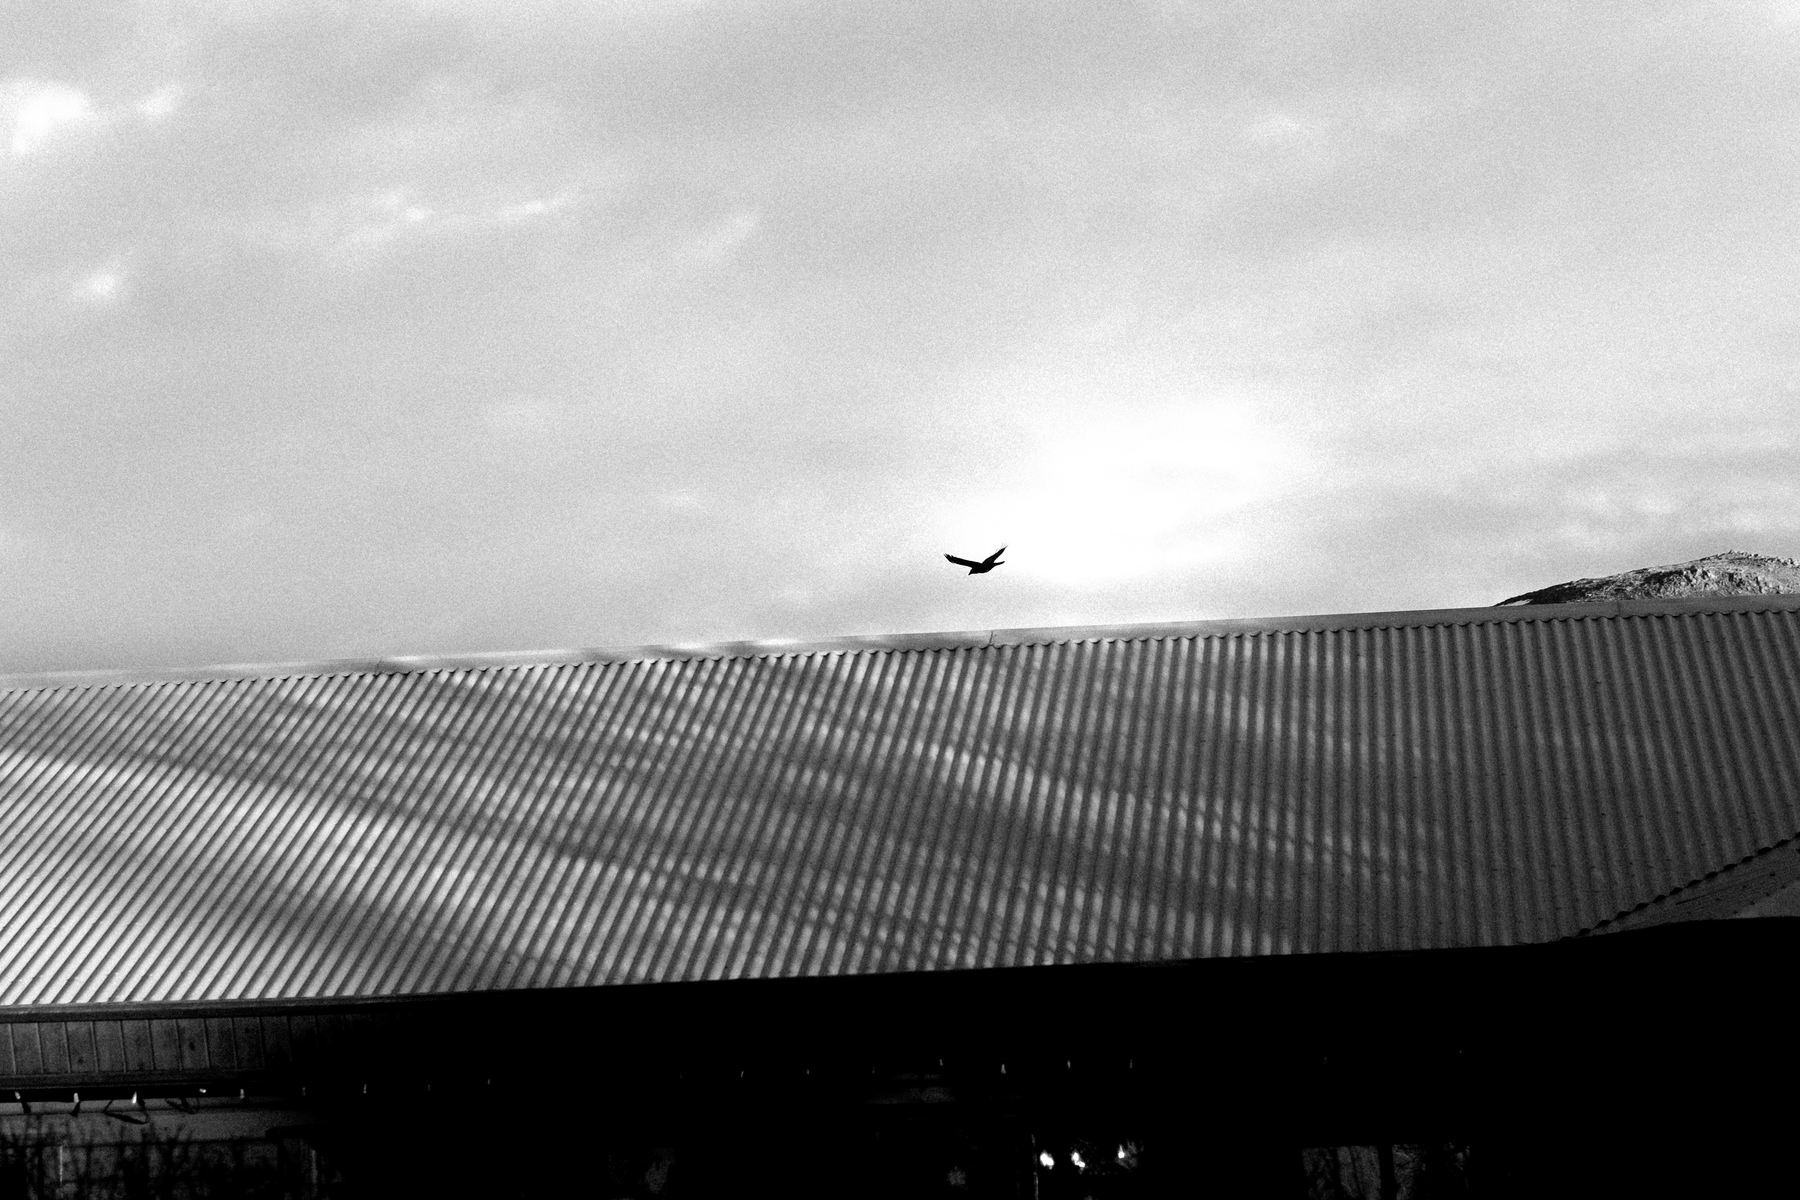 A raven flies over a roof.